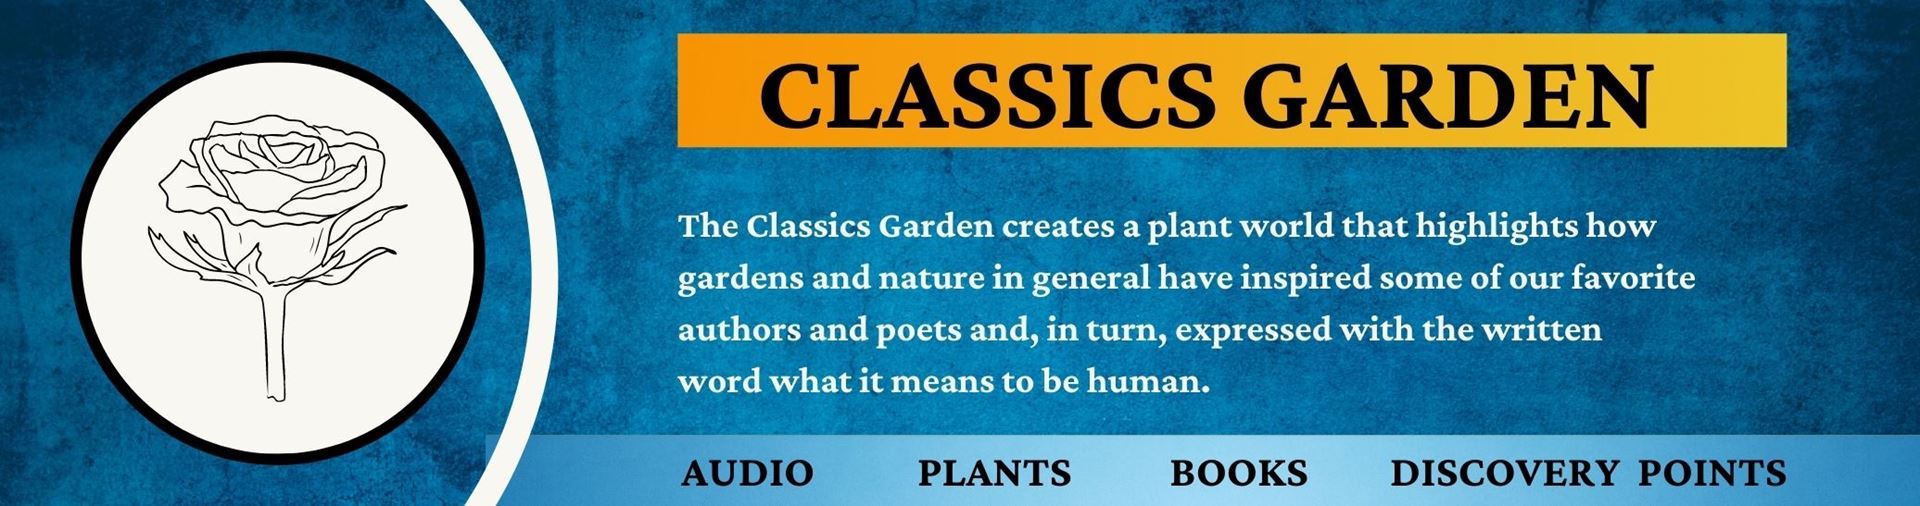 Classics Garden